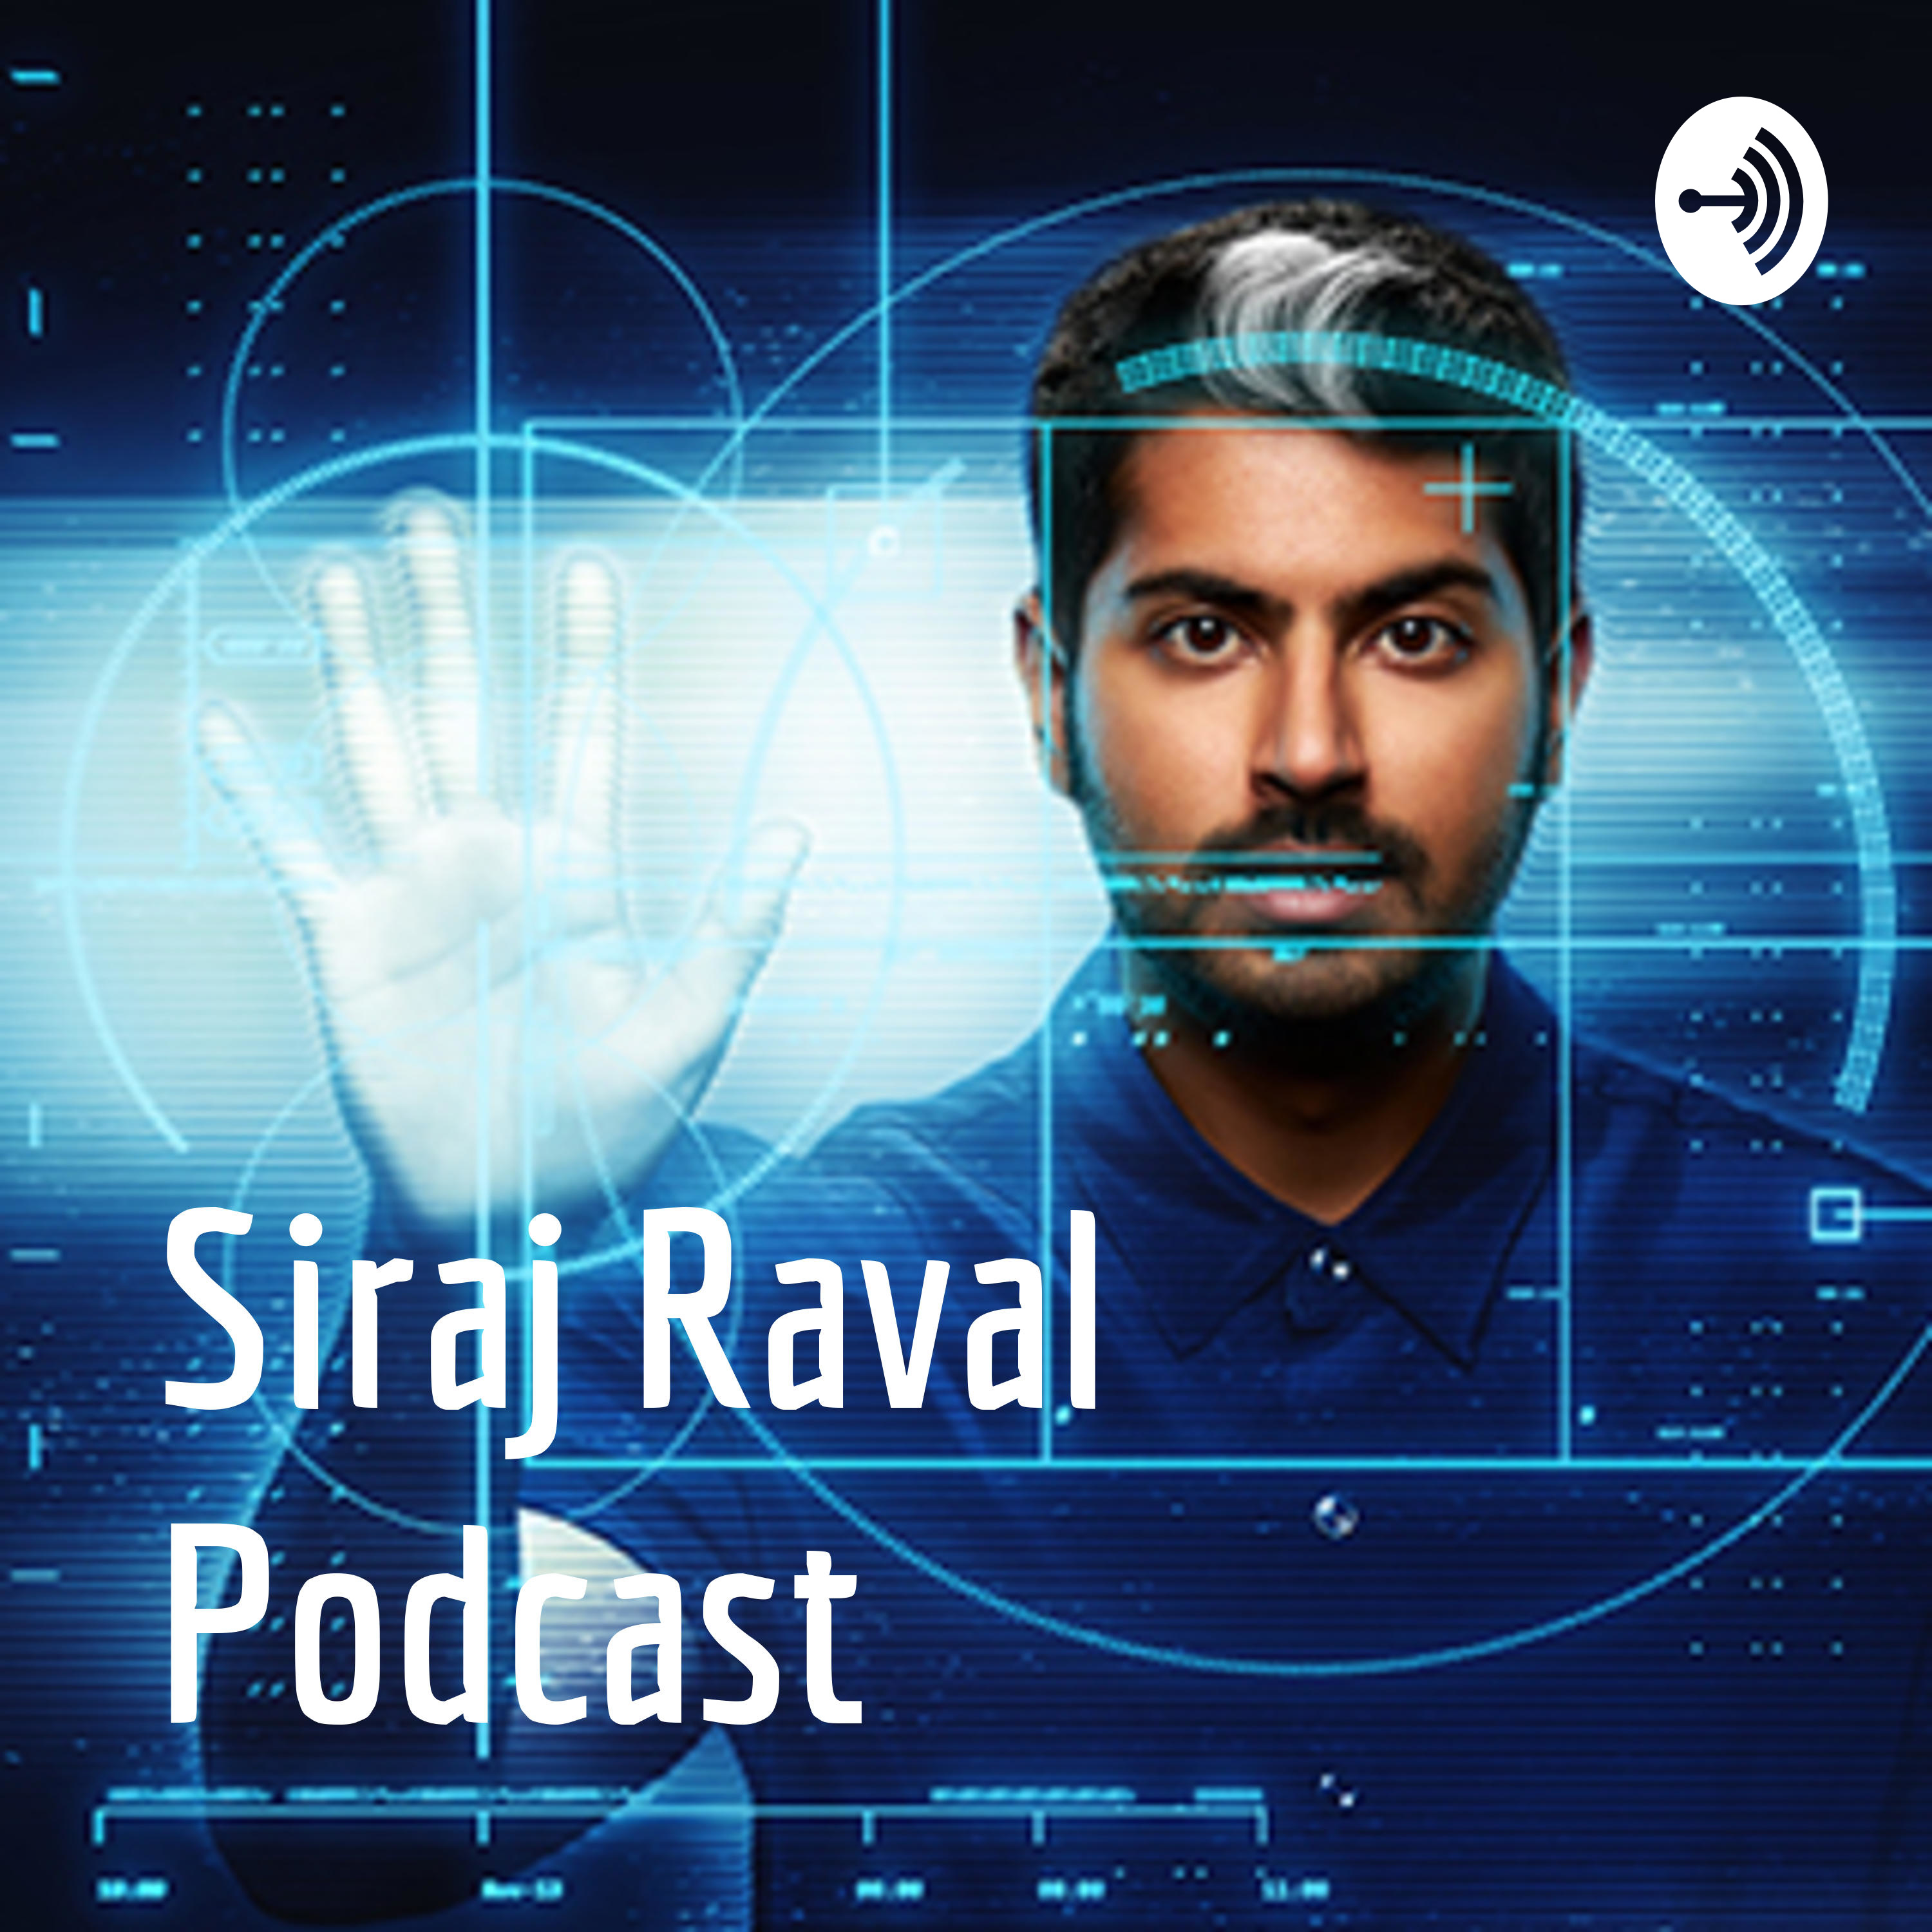 Siraj Raval Podcast Intro